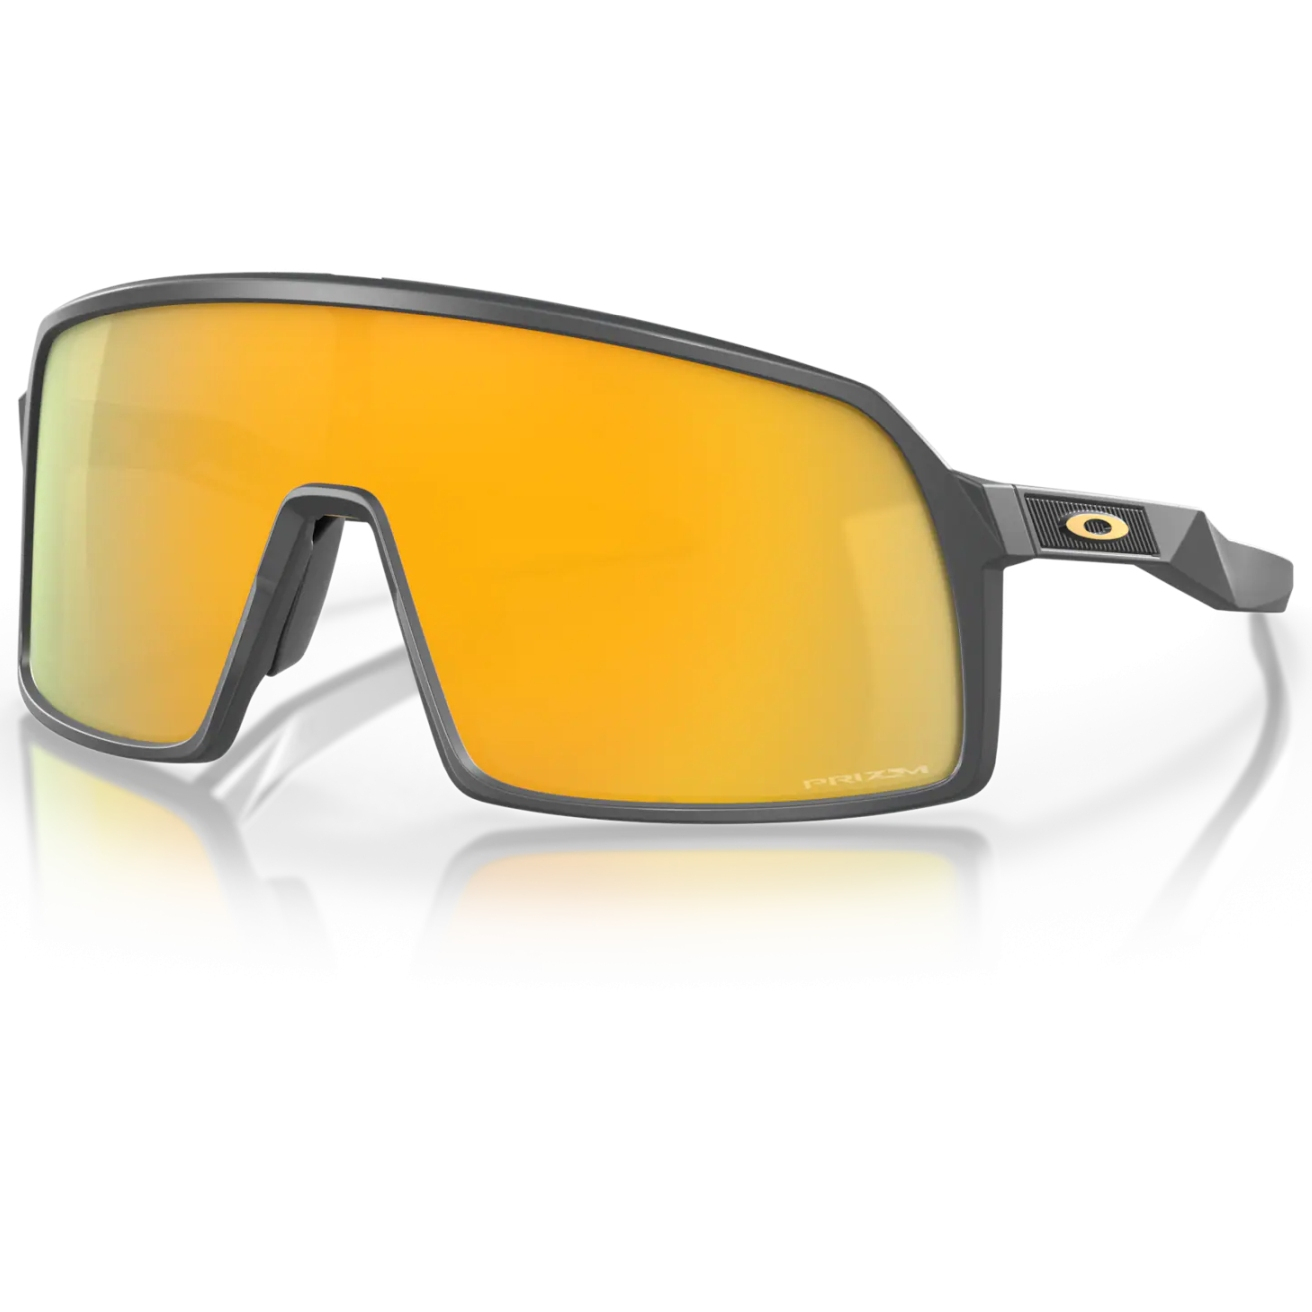 Productfoto van Oakley Sutro S Glasses - Matte Carbon/Prizm 24k - OO9462-0828